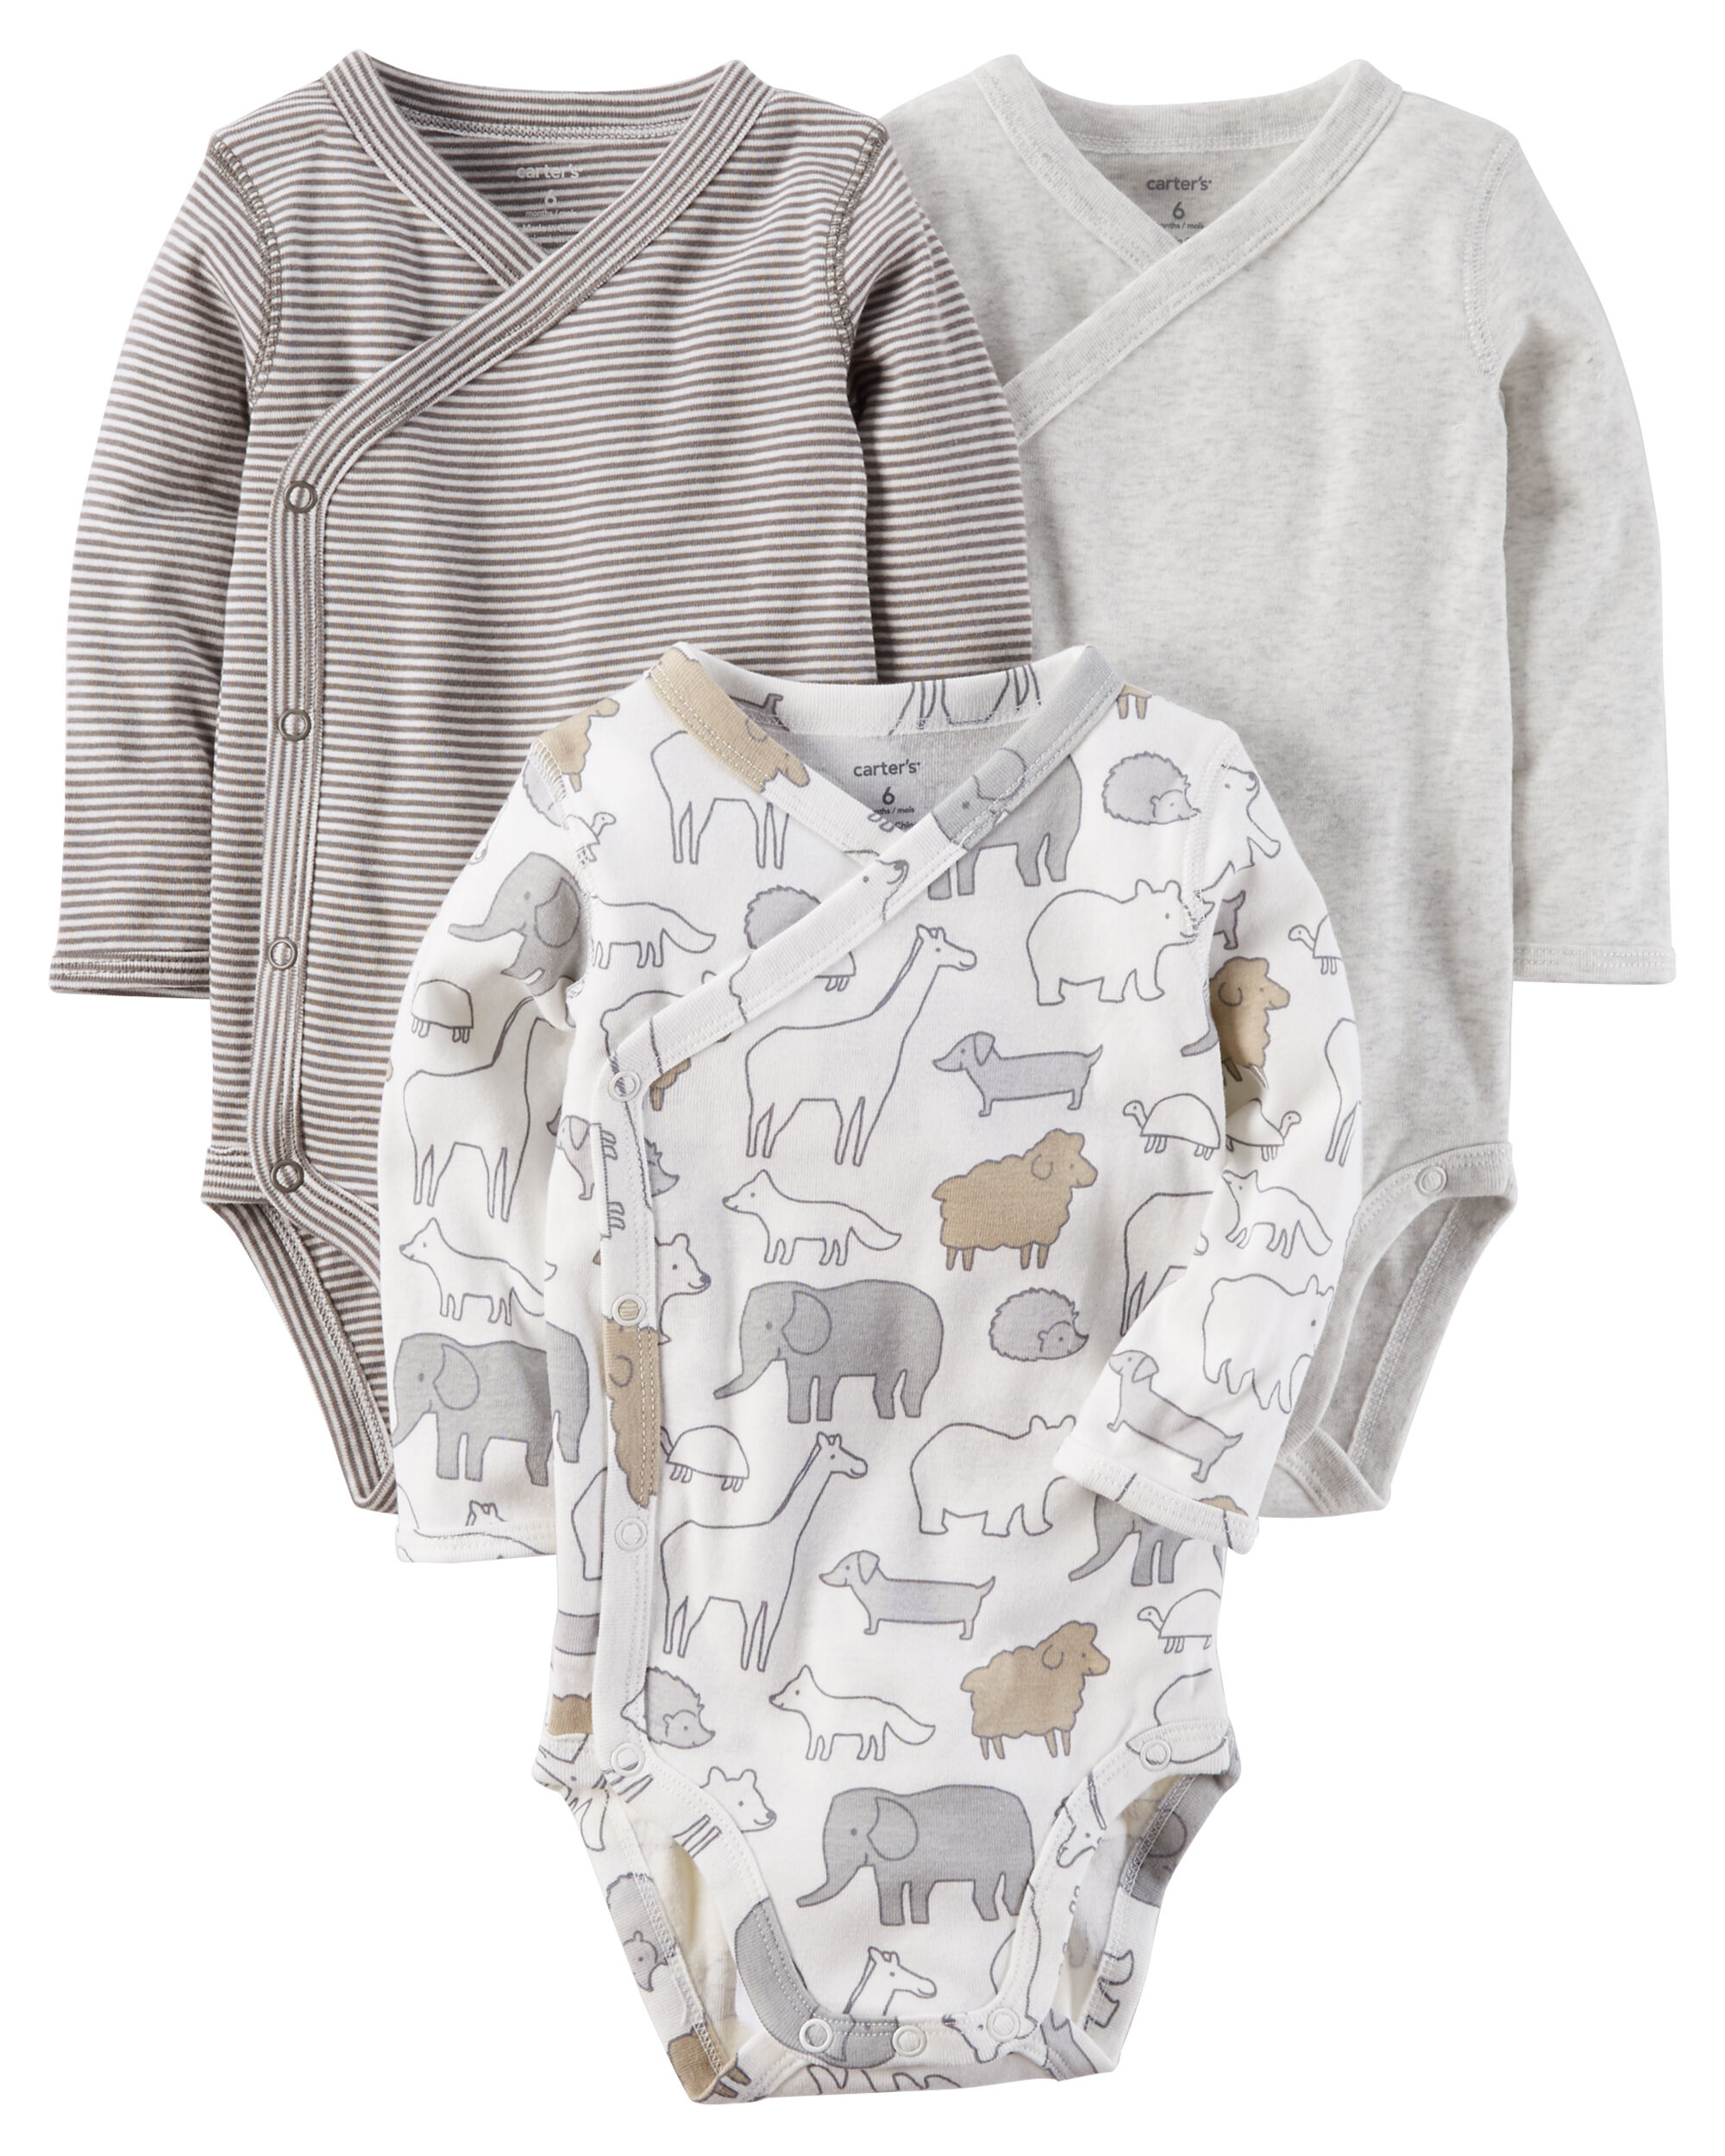 Newborn Baby Boy Clothes: Little Baby Basics | Carter's